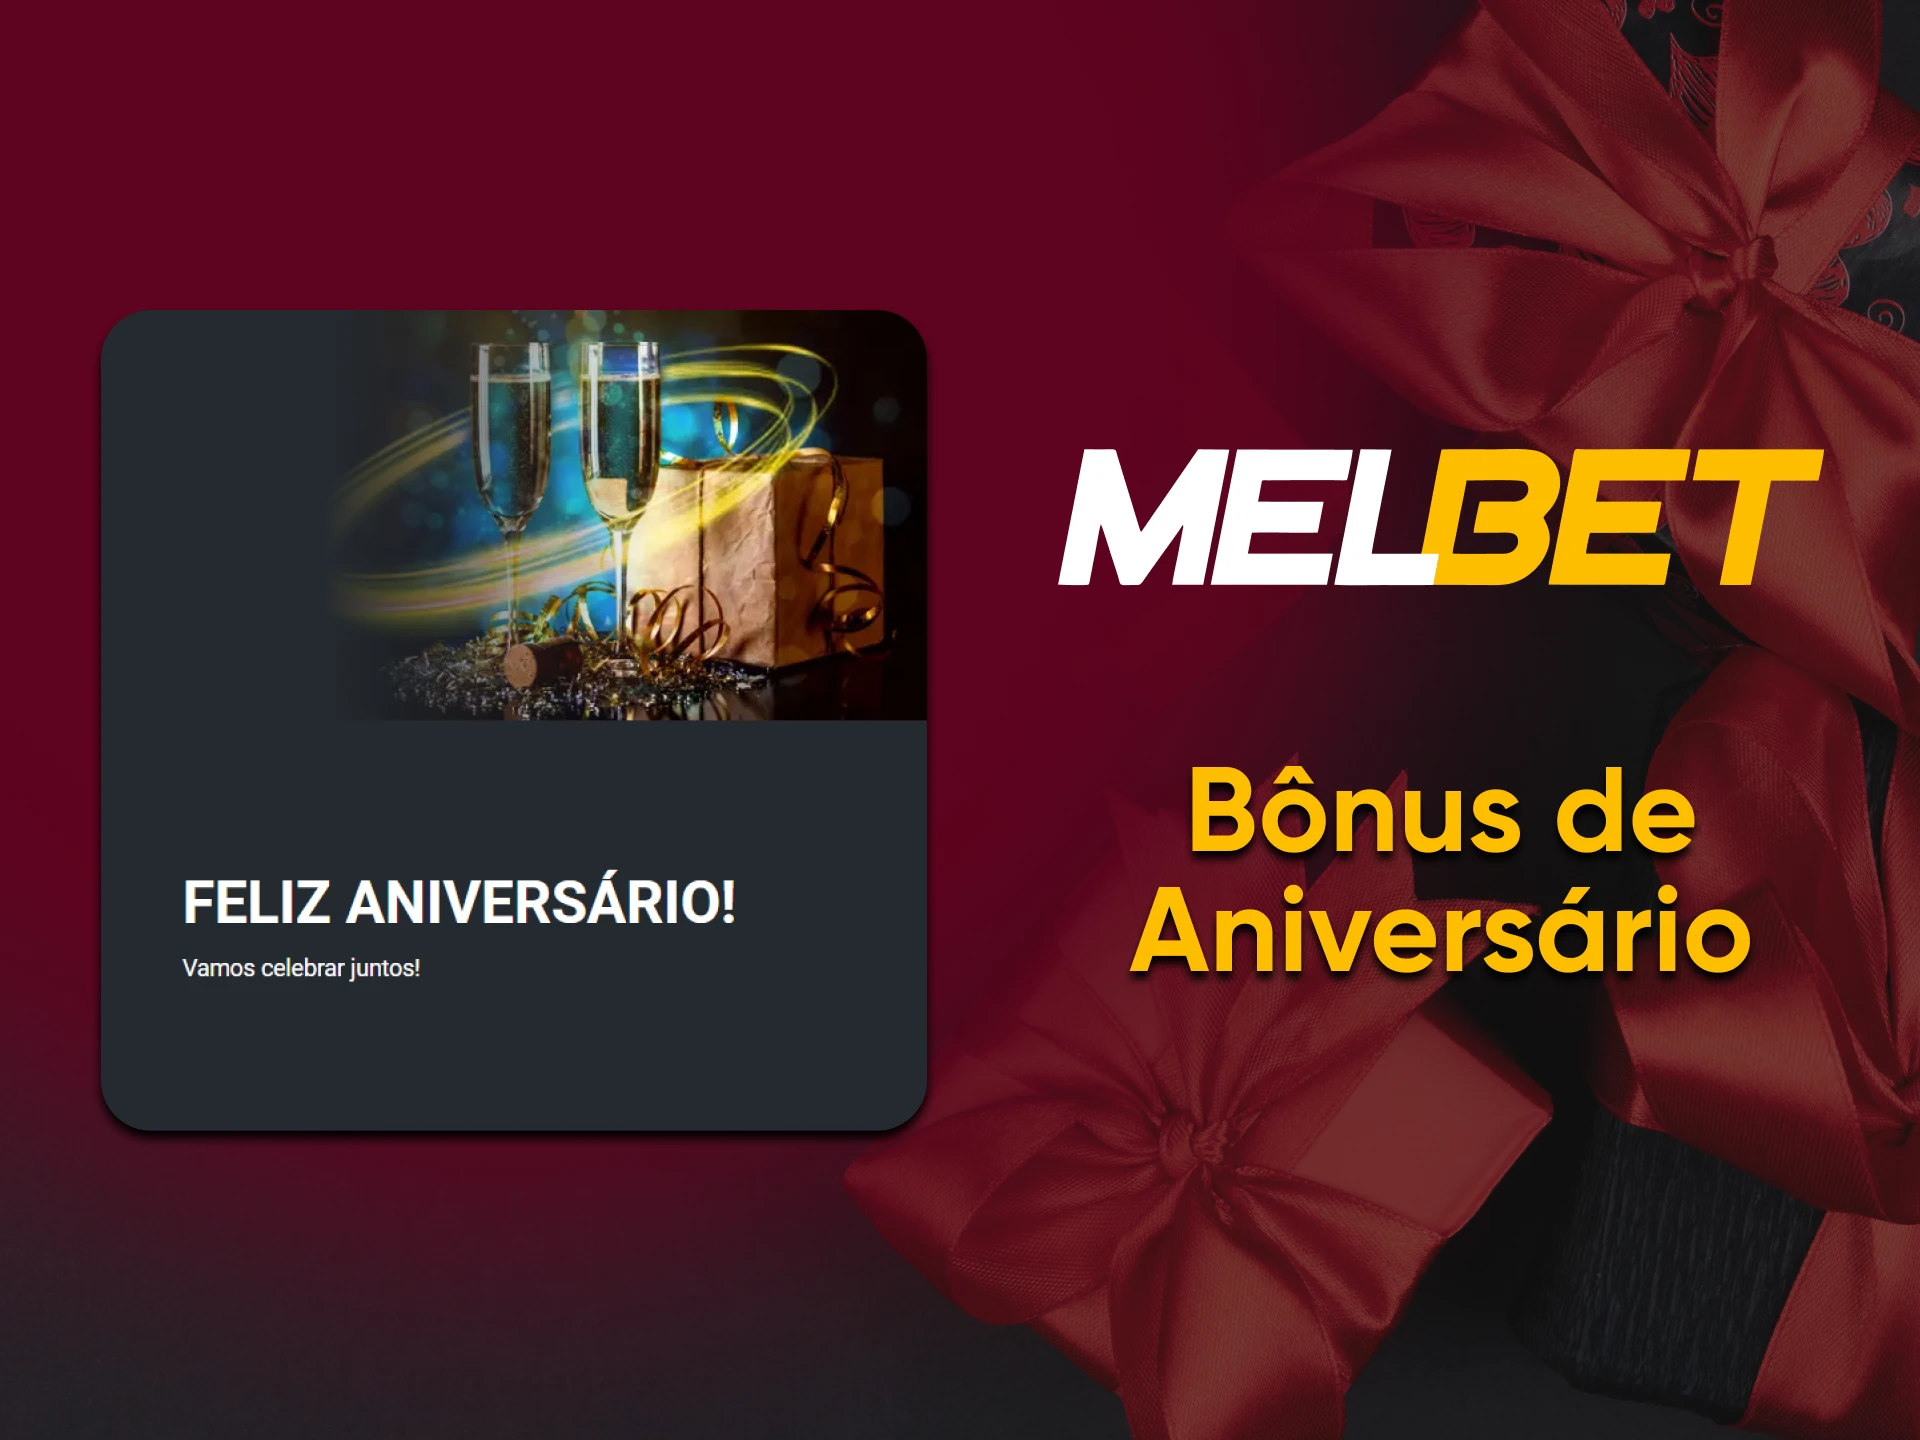 The Melbet website has an annual bonus.